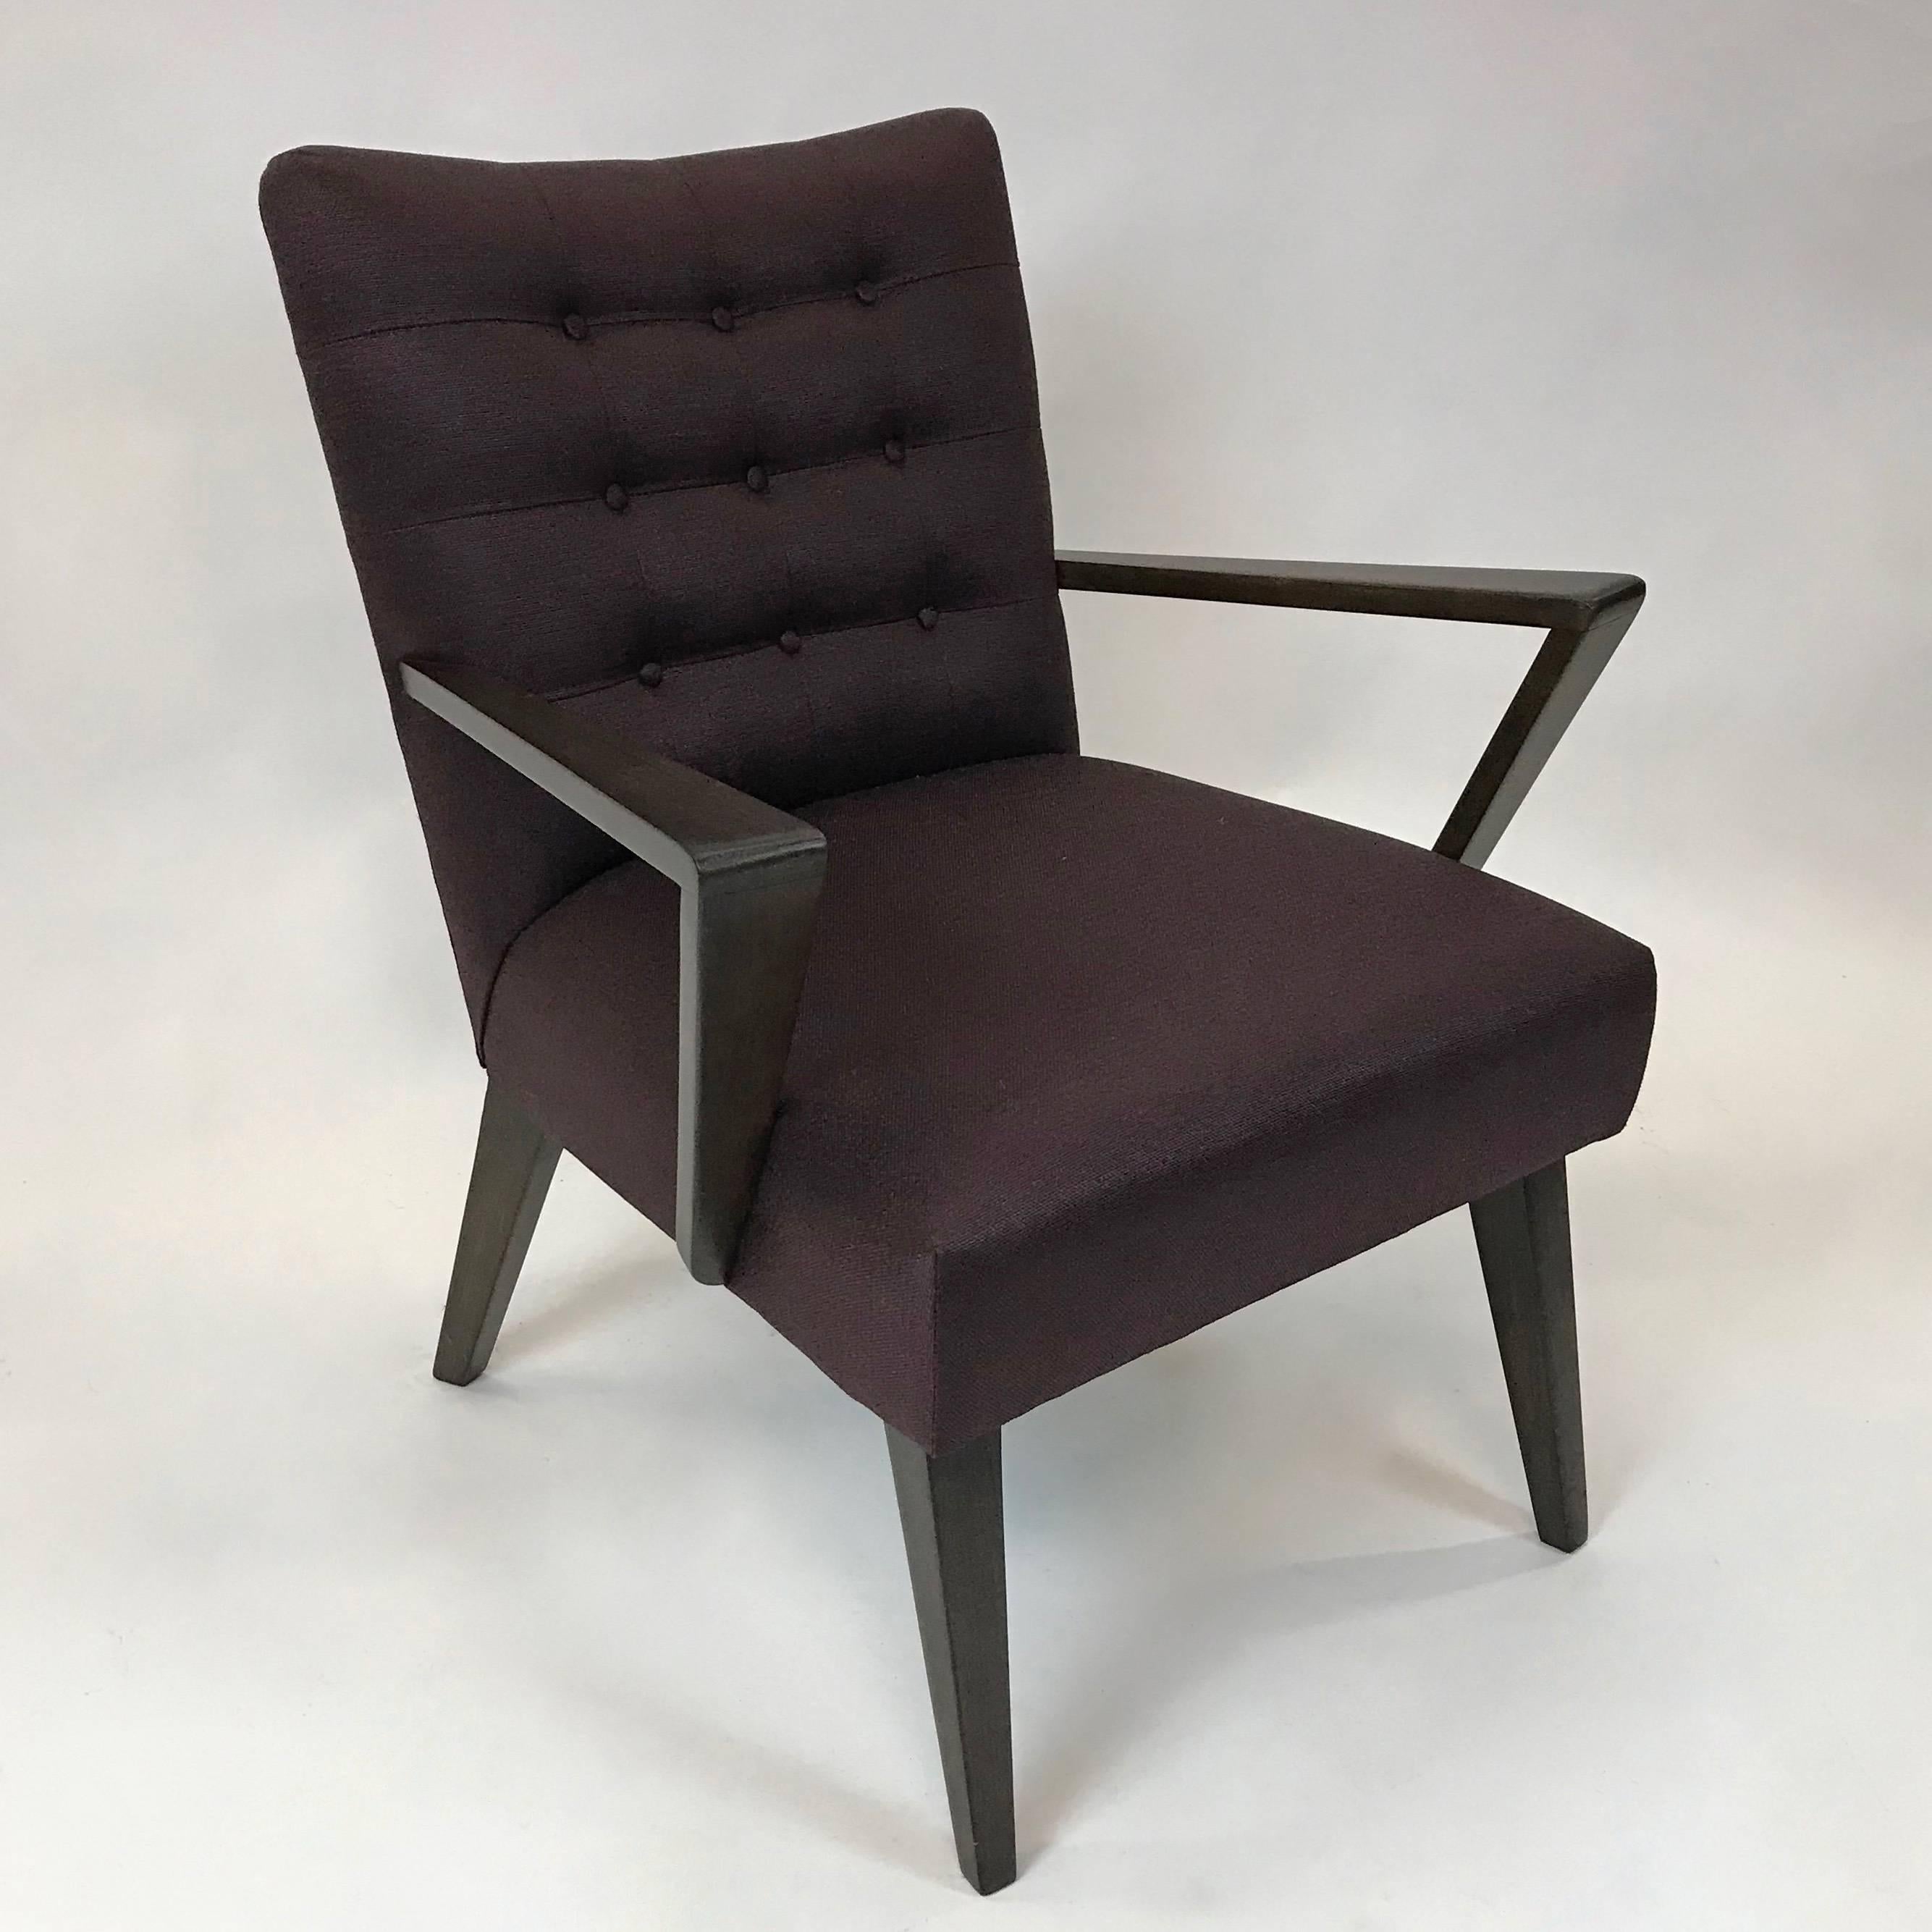 Elegant, Mid-Century Modern, armchair features a sculptural ebonized maple frame with aubergine cotton linen blend upholstery.